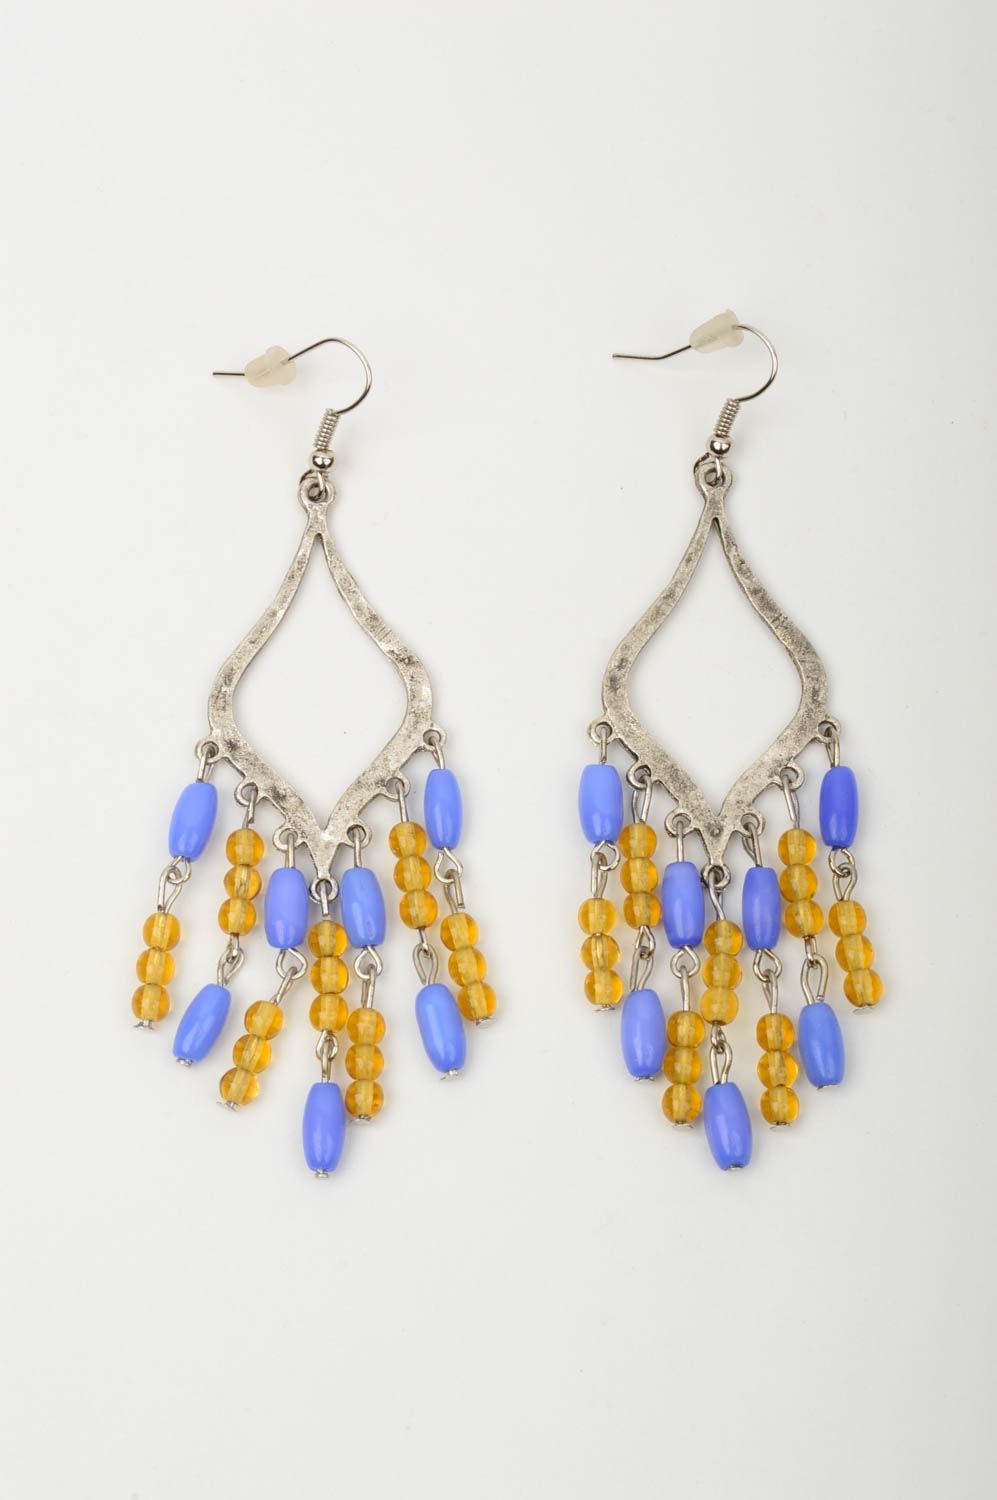 Handmade earrings designer jewelry unusual accessory gift ideas beads earrings photo 3